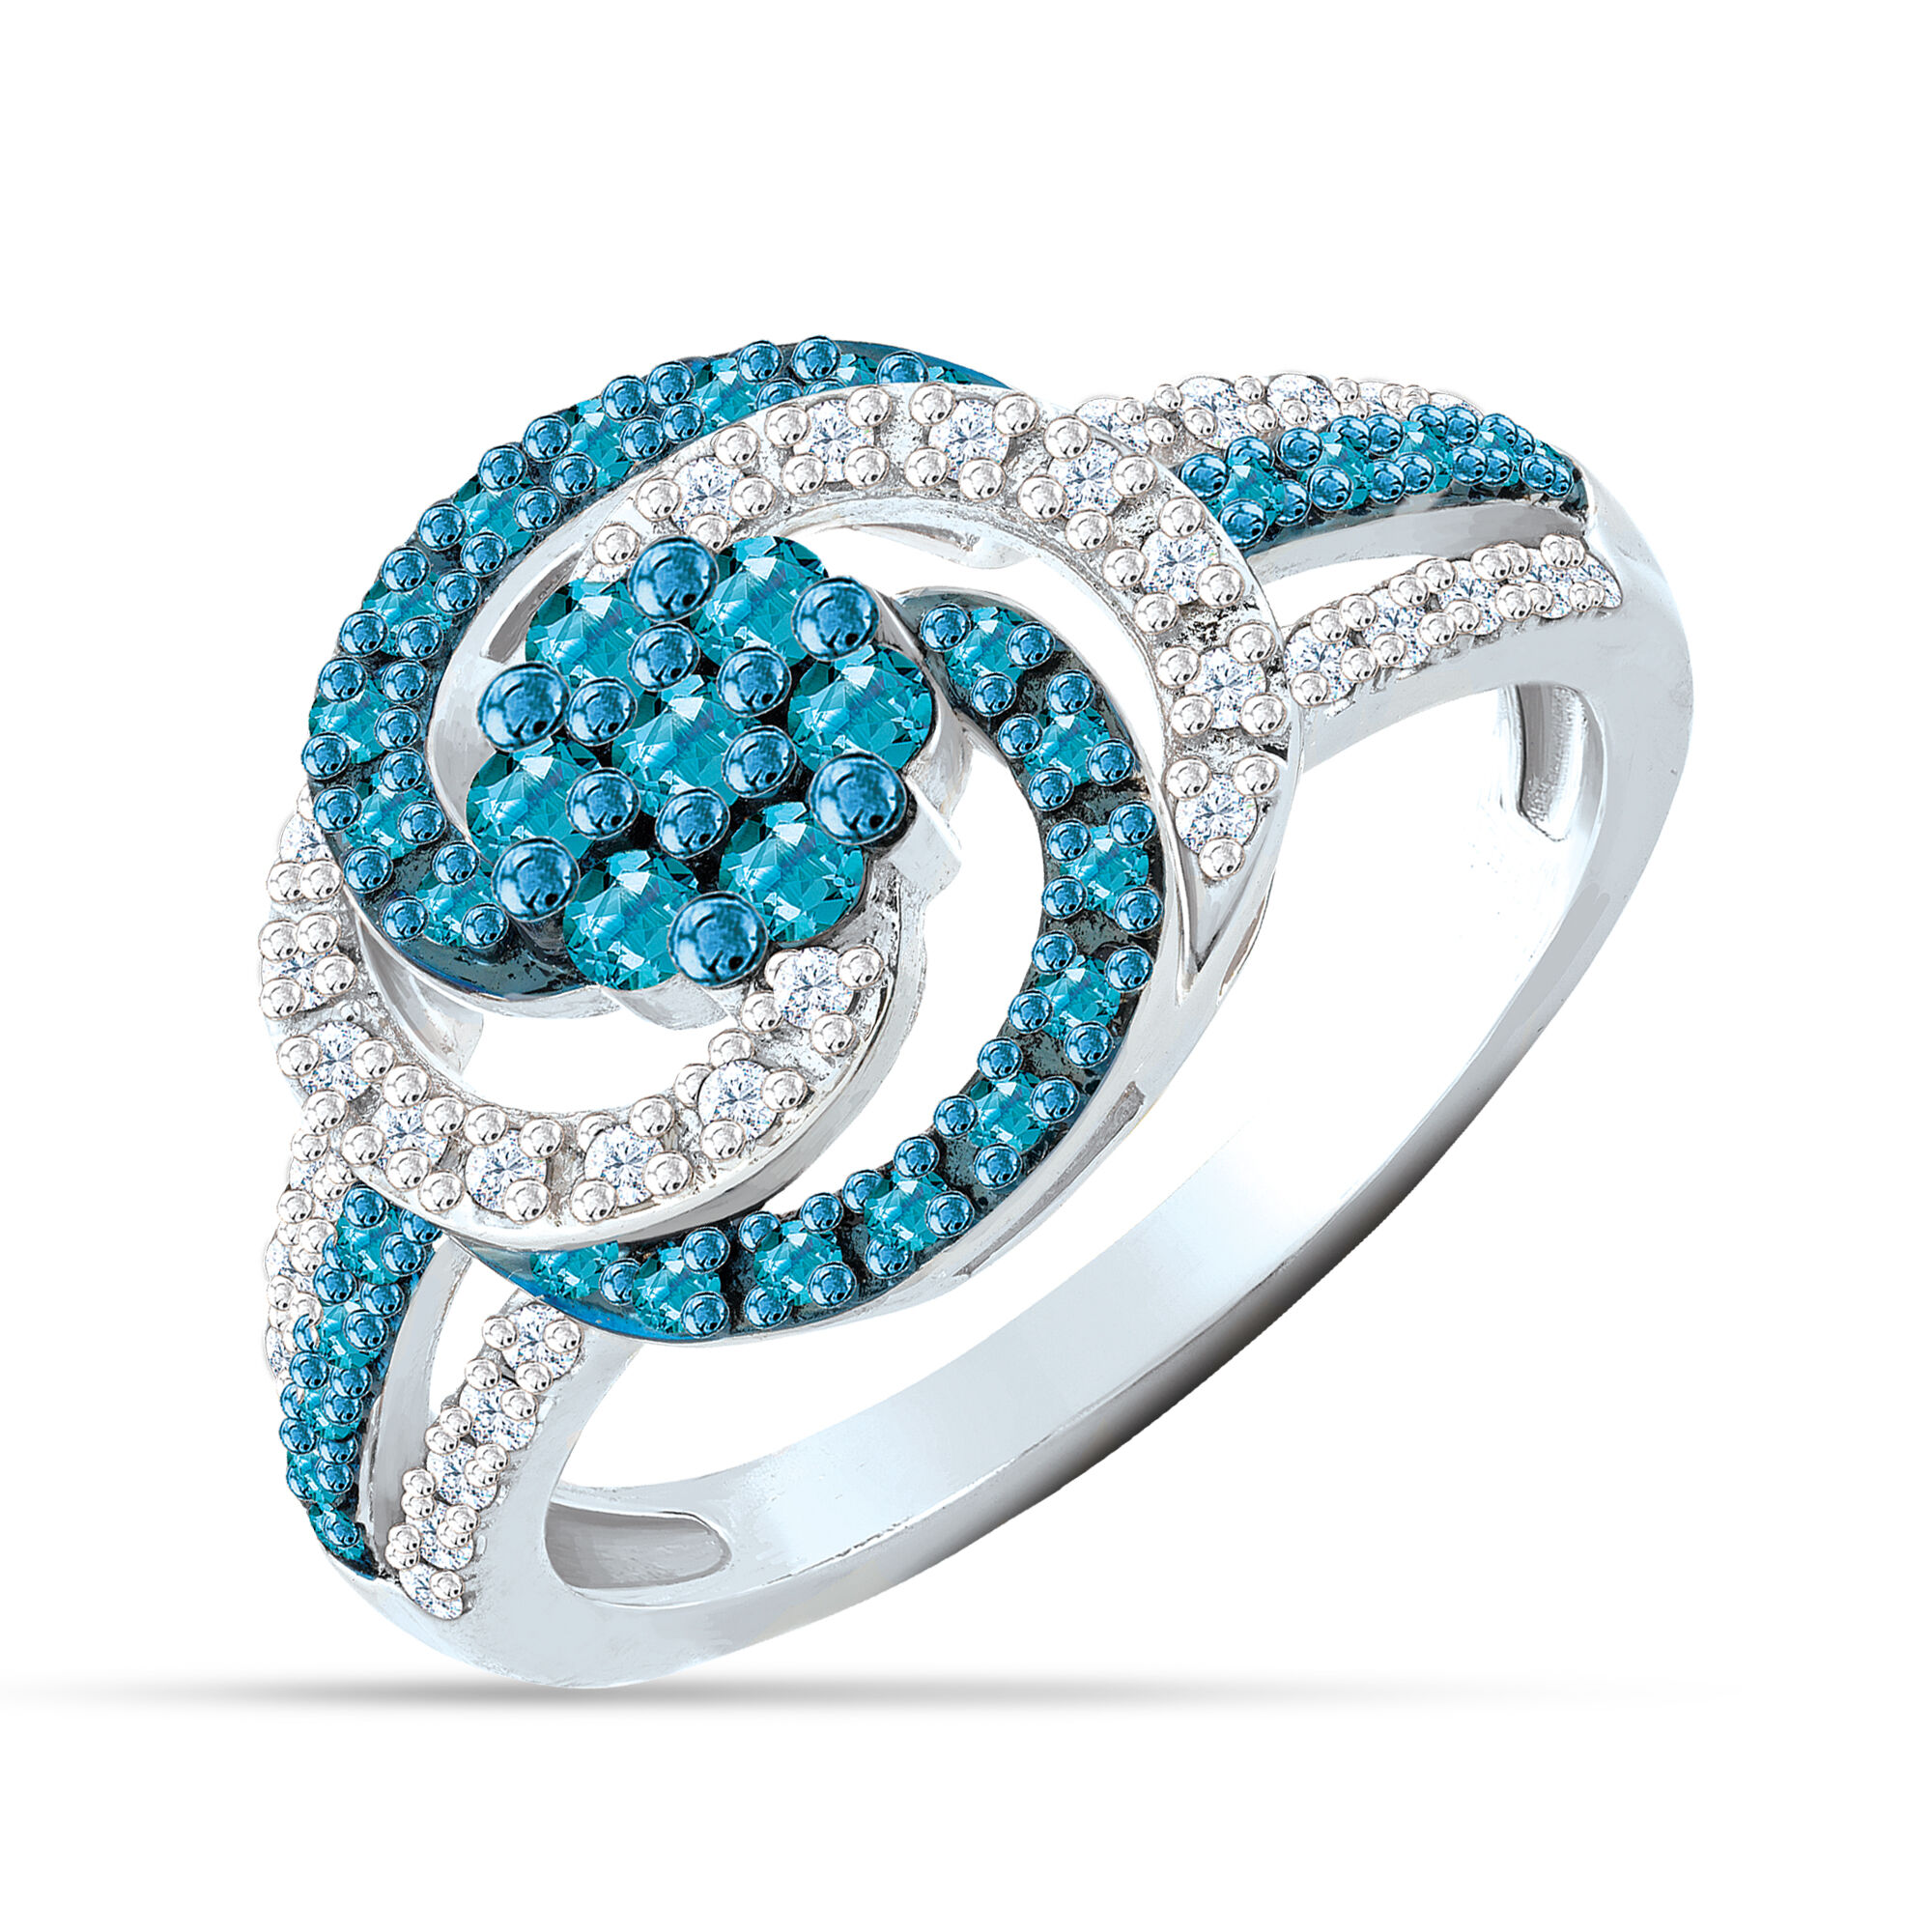 Simply Stunning Blue White Diamond Ring 6533 0011 a main